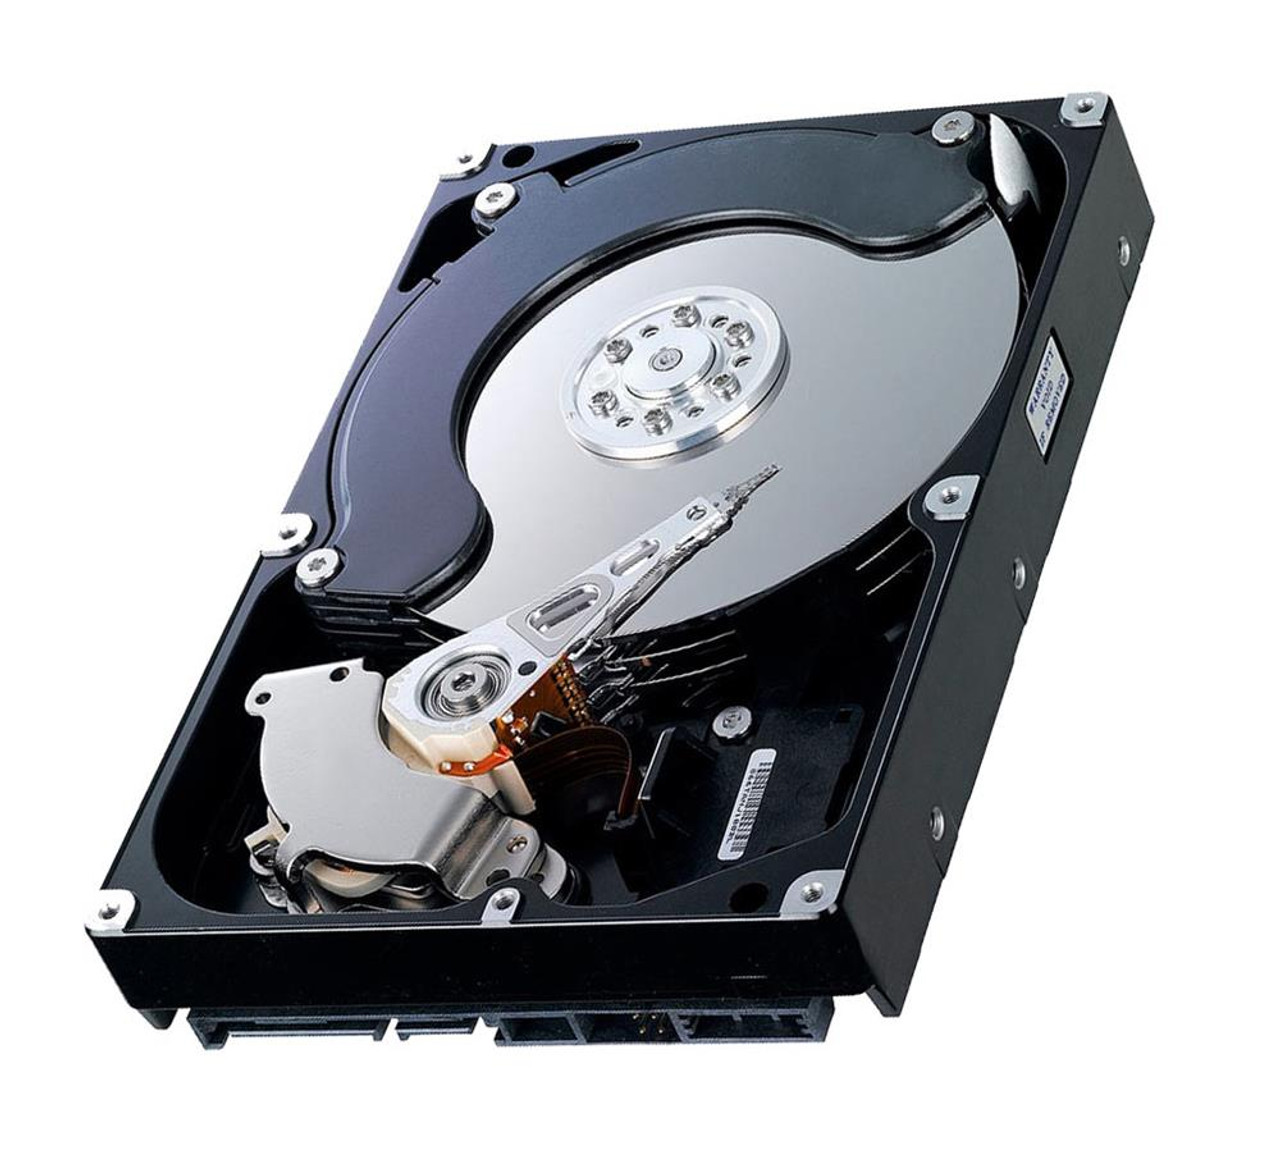 AC23200-00LB - Western Digital Caviar 3.2GB 5400RPM ATA-33 256KB Cache 3.5-inch Hard Disk Drive